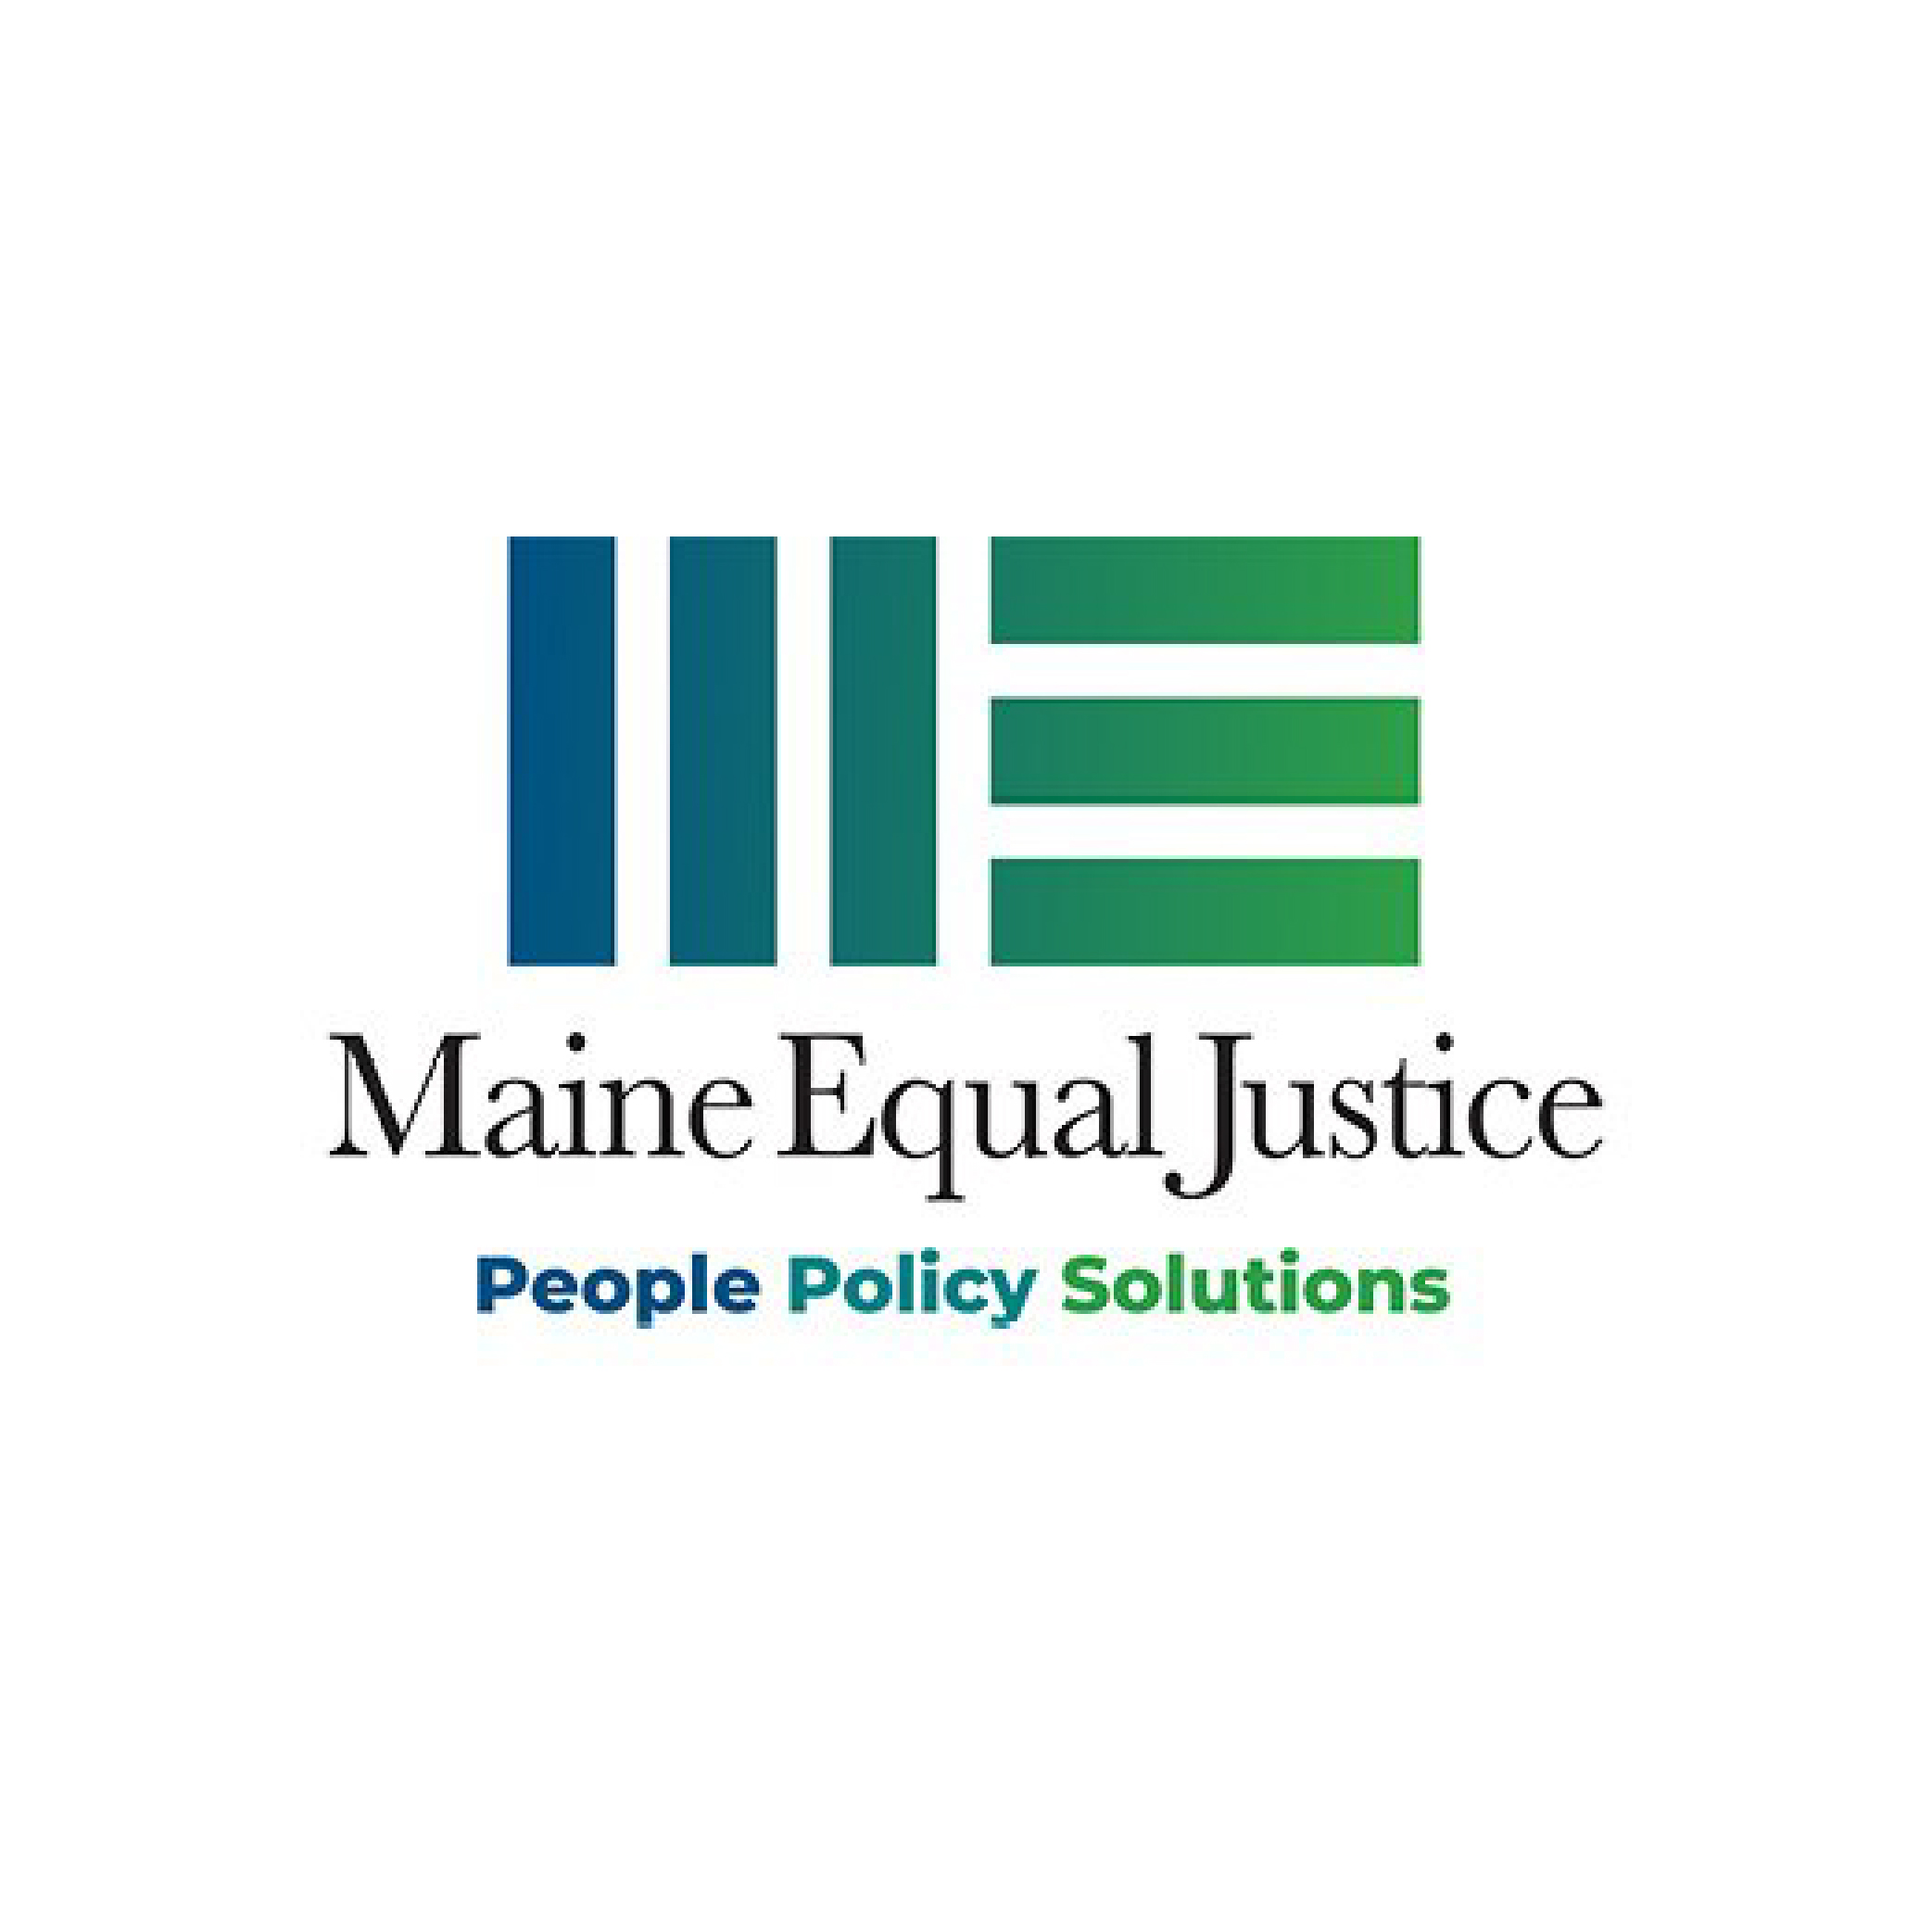 Maine Equal Justice logo